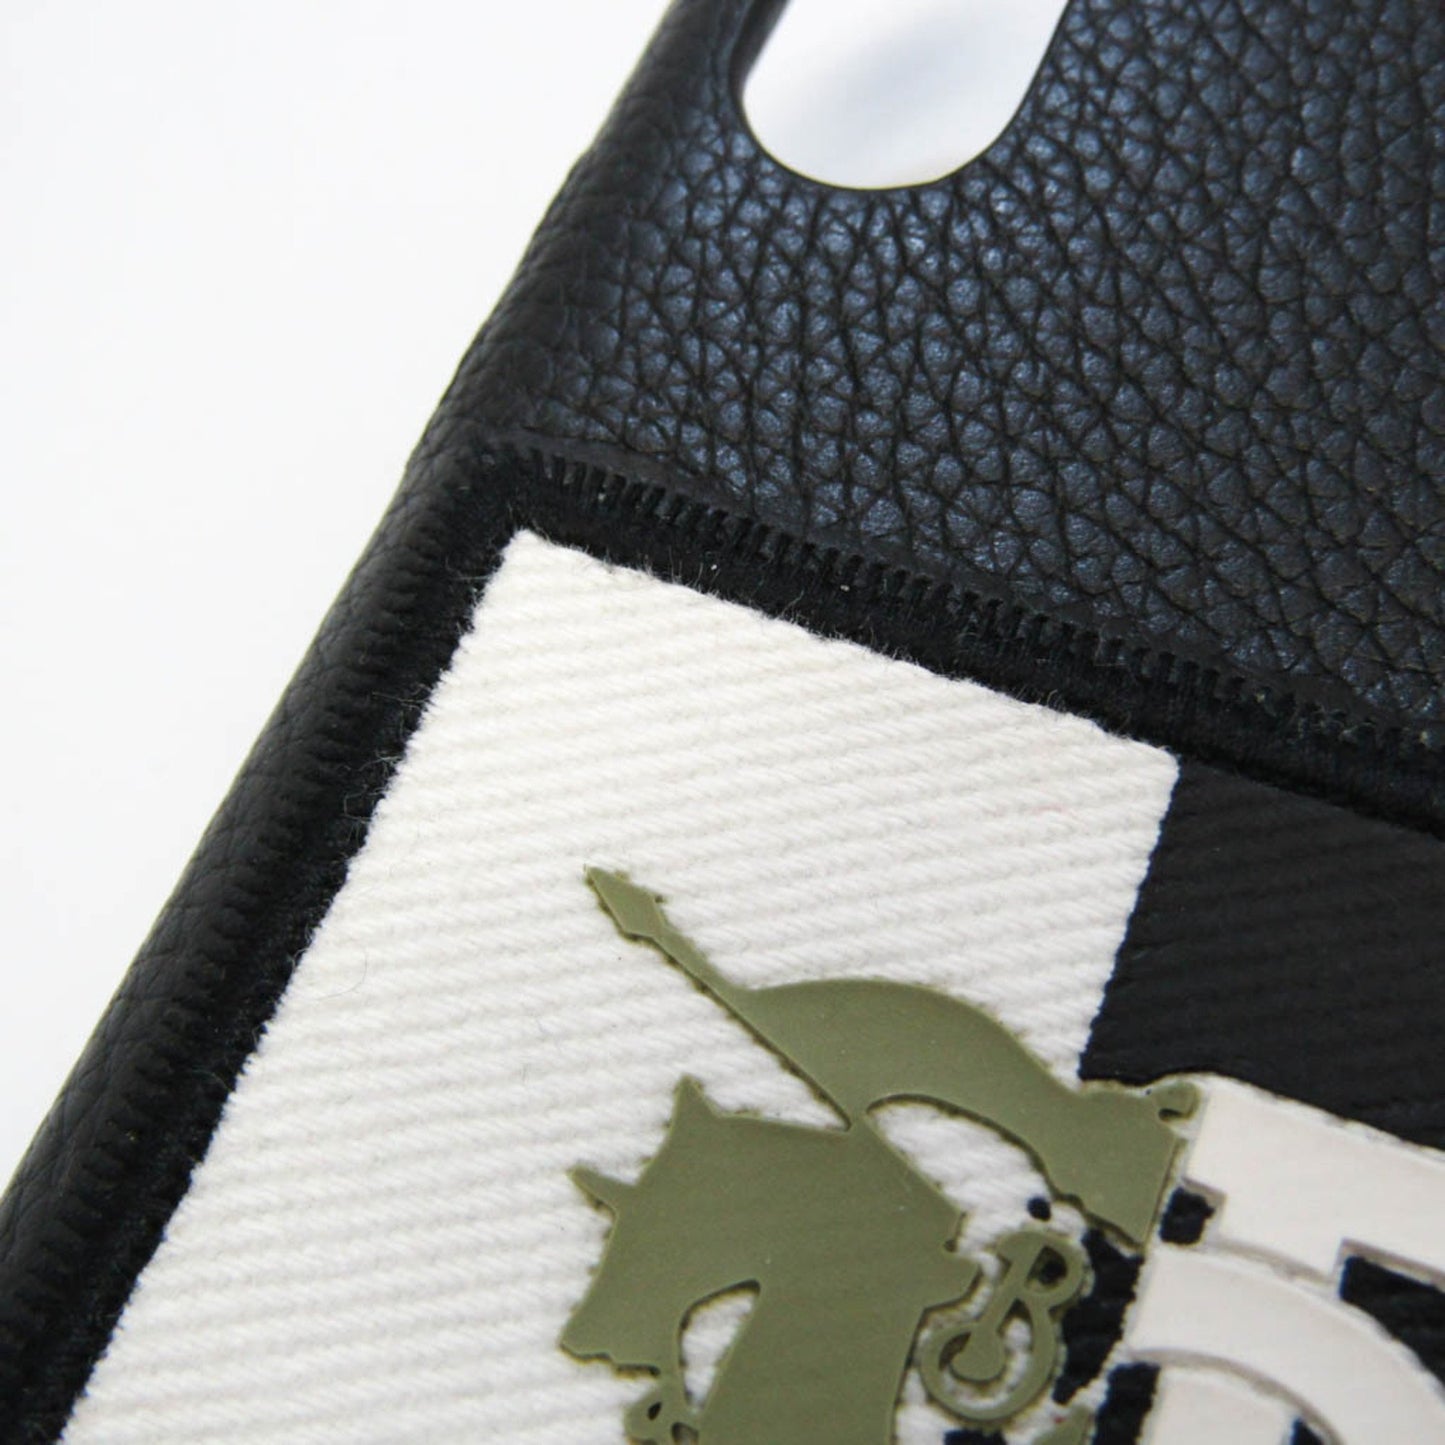 Burberry Unisex Night Logo Leather Bumper Phone Case in Black